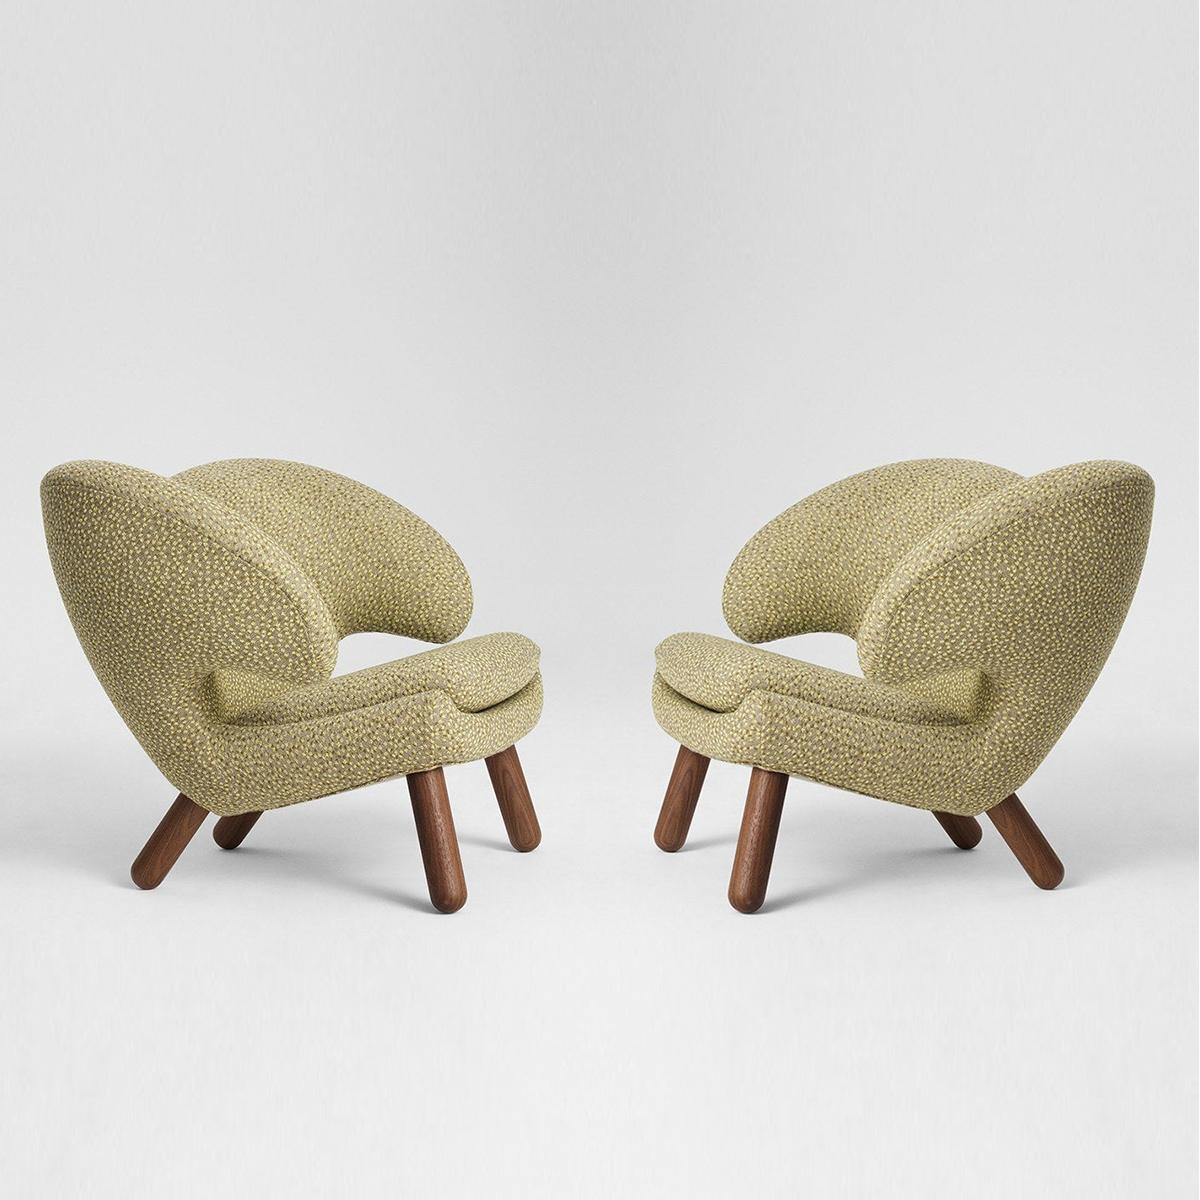 Set of Two Pelican Chairs in Garnet Kvadrat Remix and Wood by Finn Juhl 2